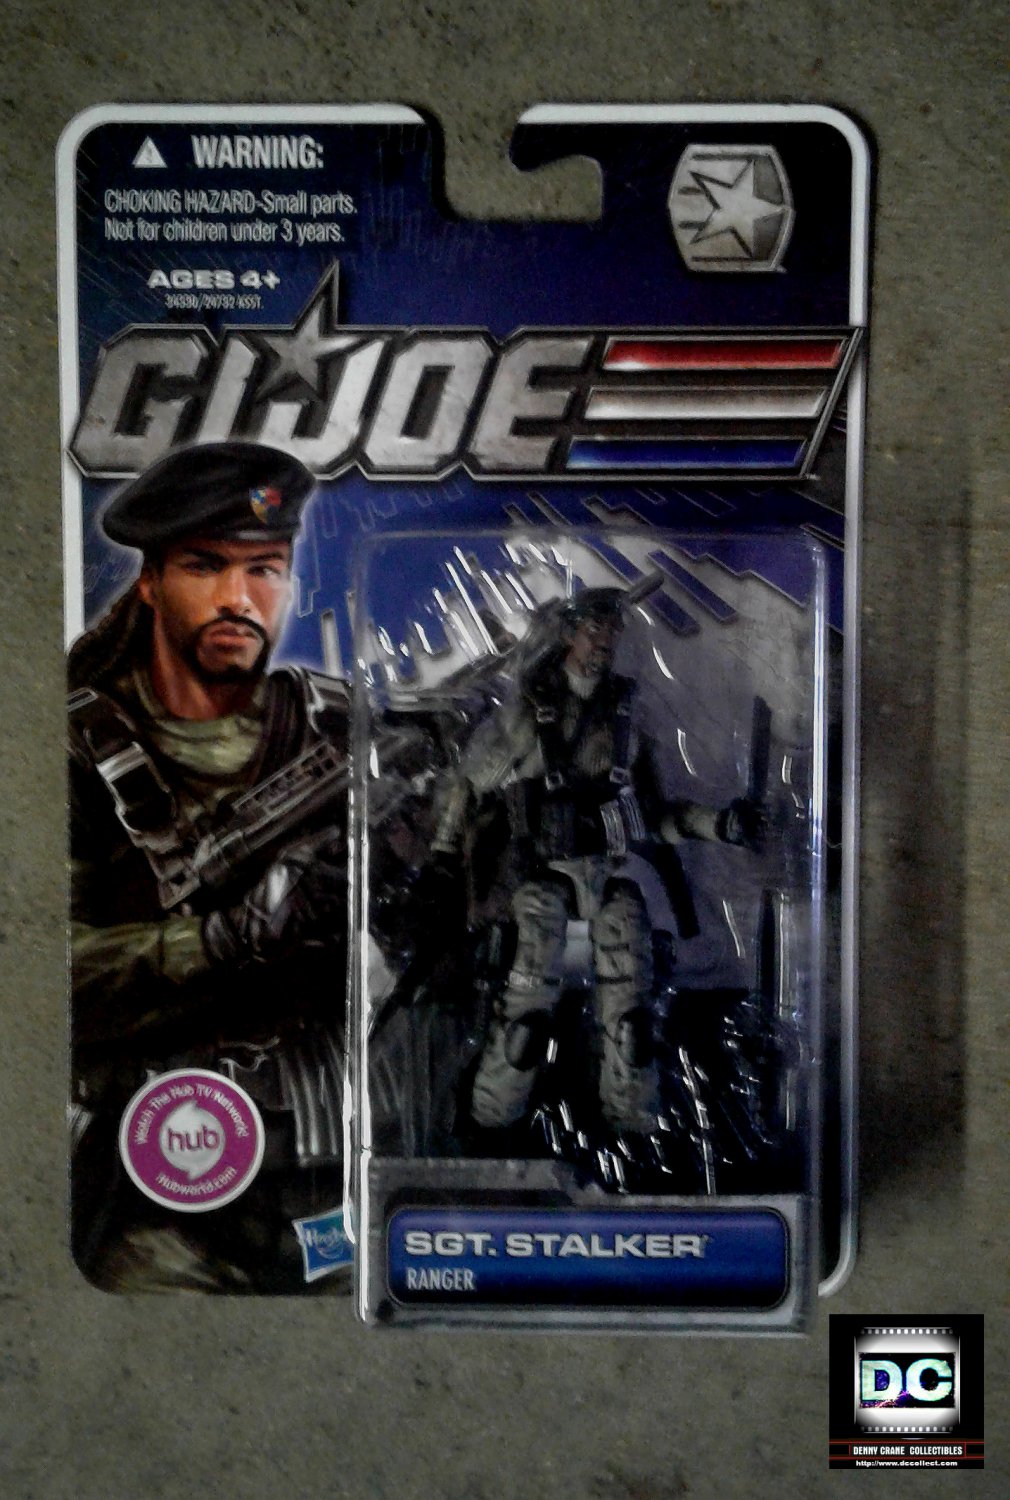 Sgt Stalker v13 Ranger GIJoe 30th Anniversary 2011 POC Hasbro 34330 GI Joe Pursuit of Cobra